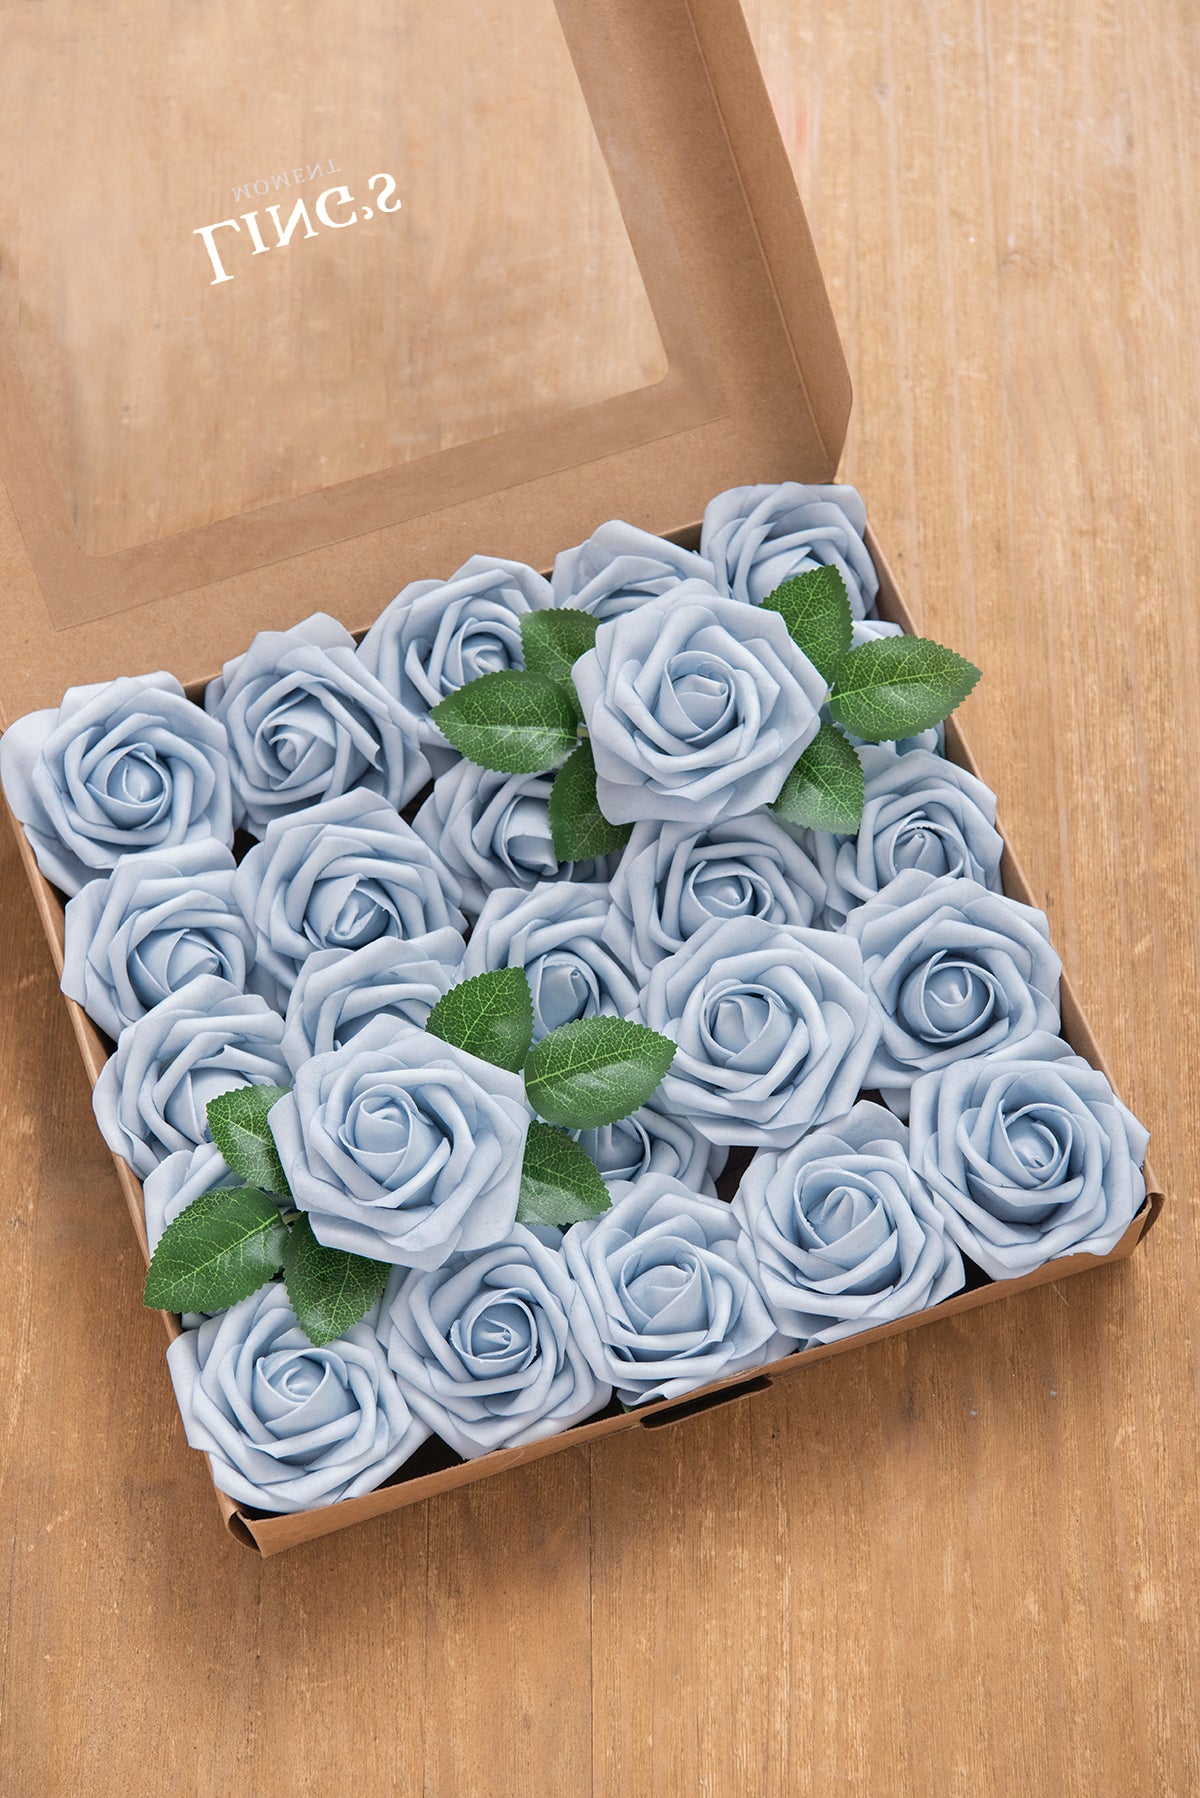 3" Foam Rose with Stem - Powder Blue